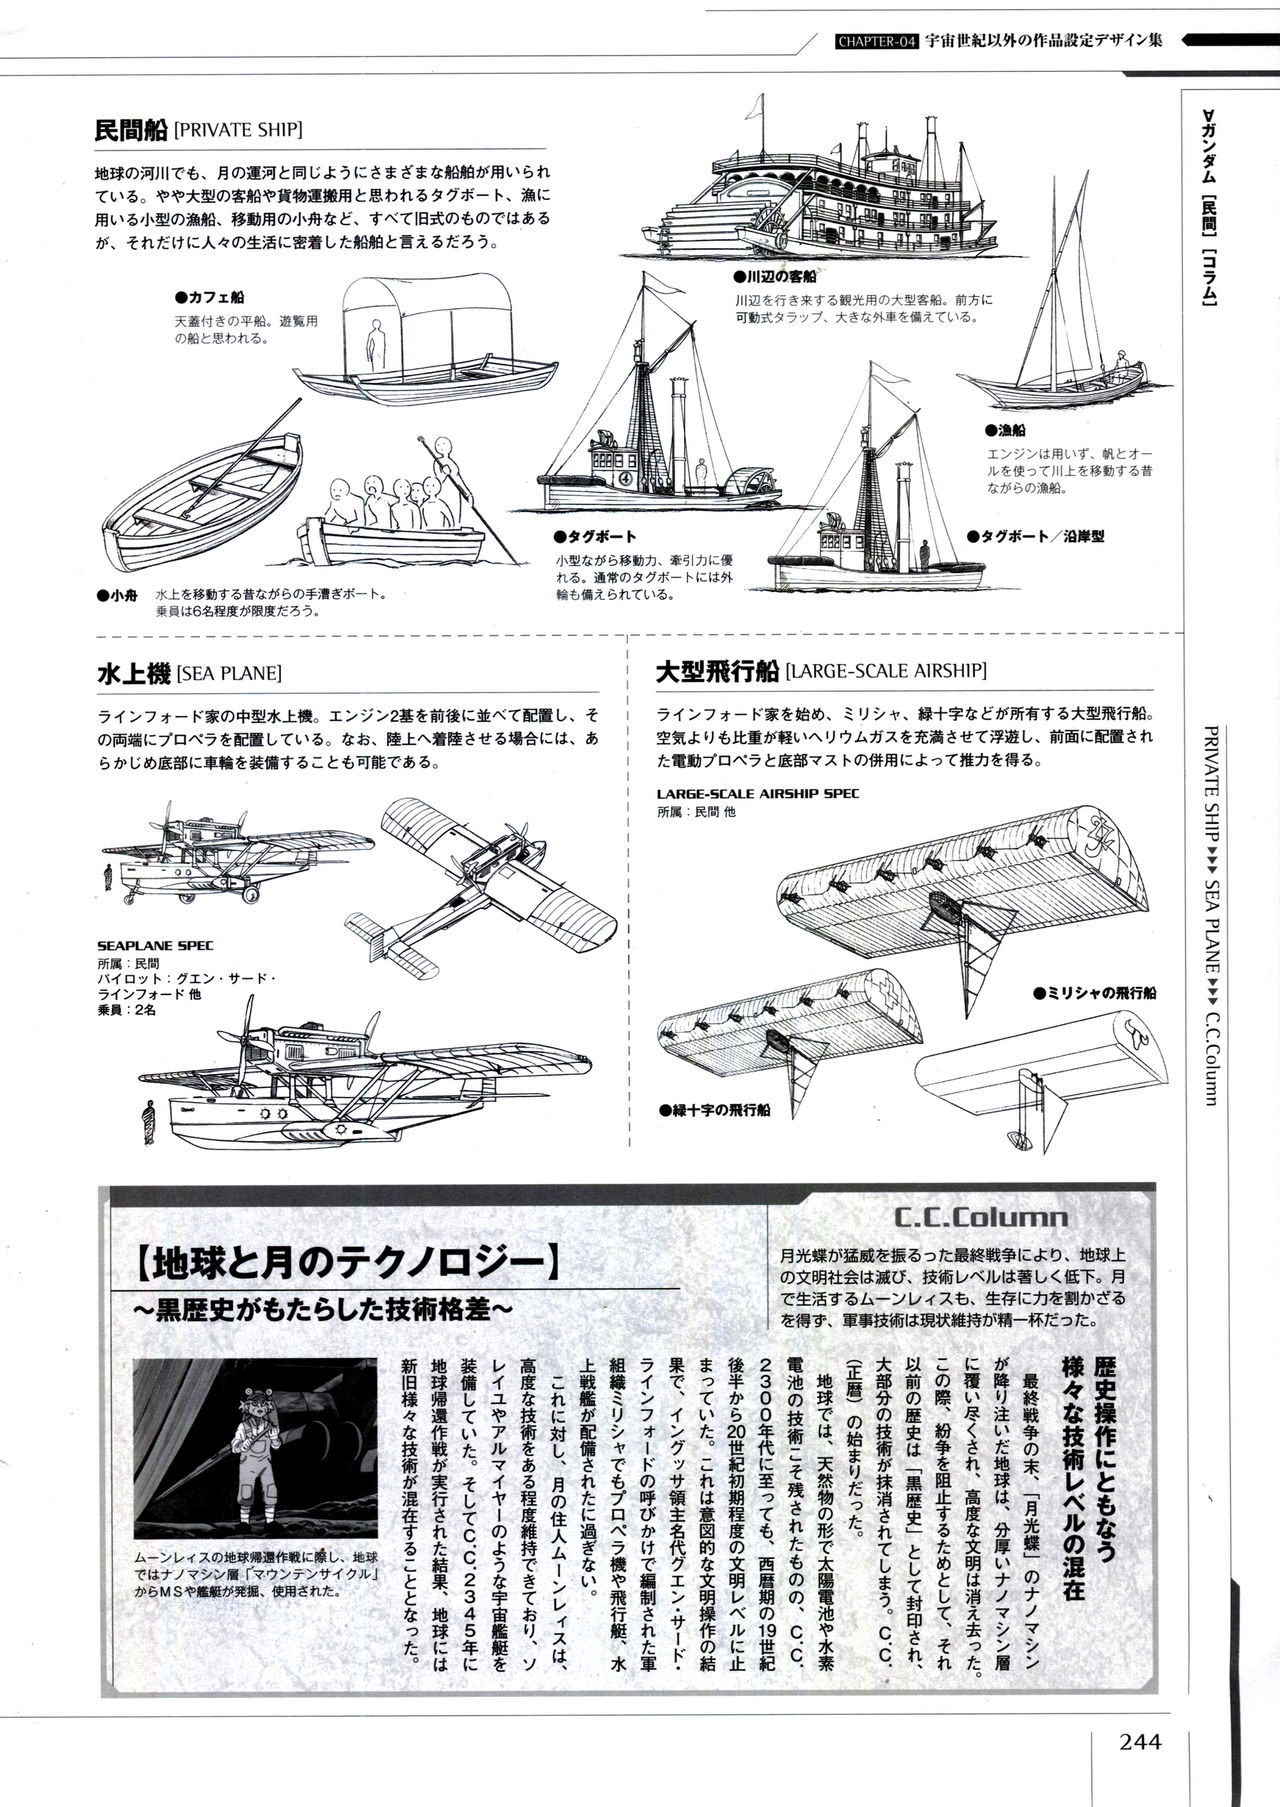 Mobile Suit Gundam - Ship & Aerospace Plane Encyclopedia - Revised Edition 249